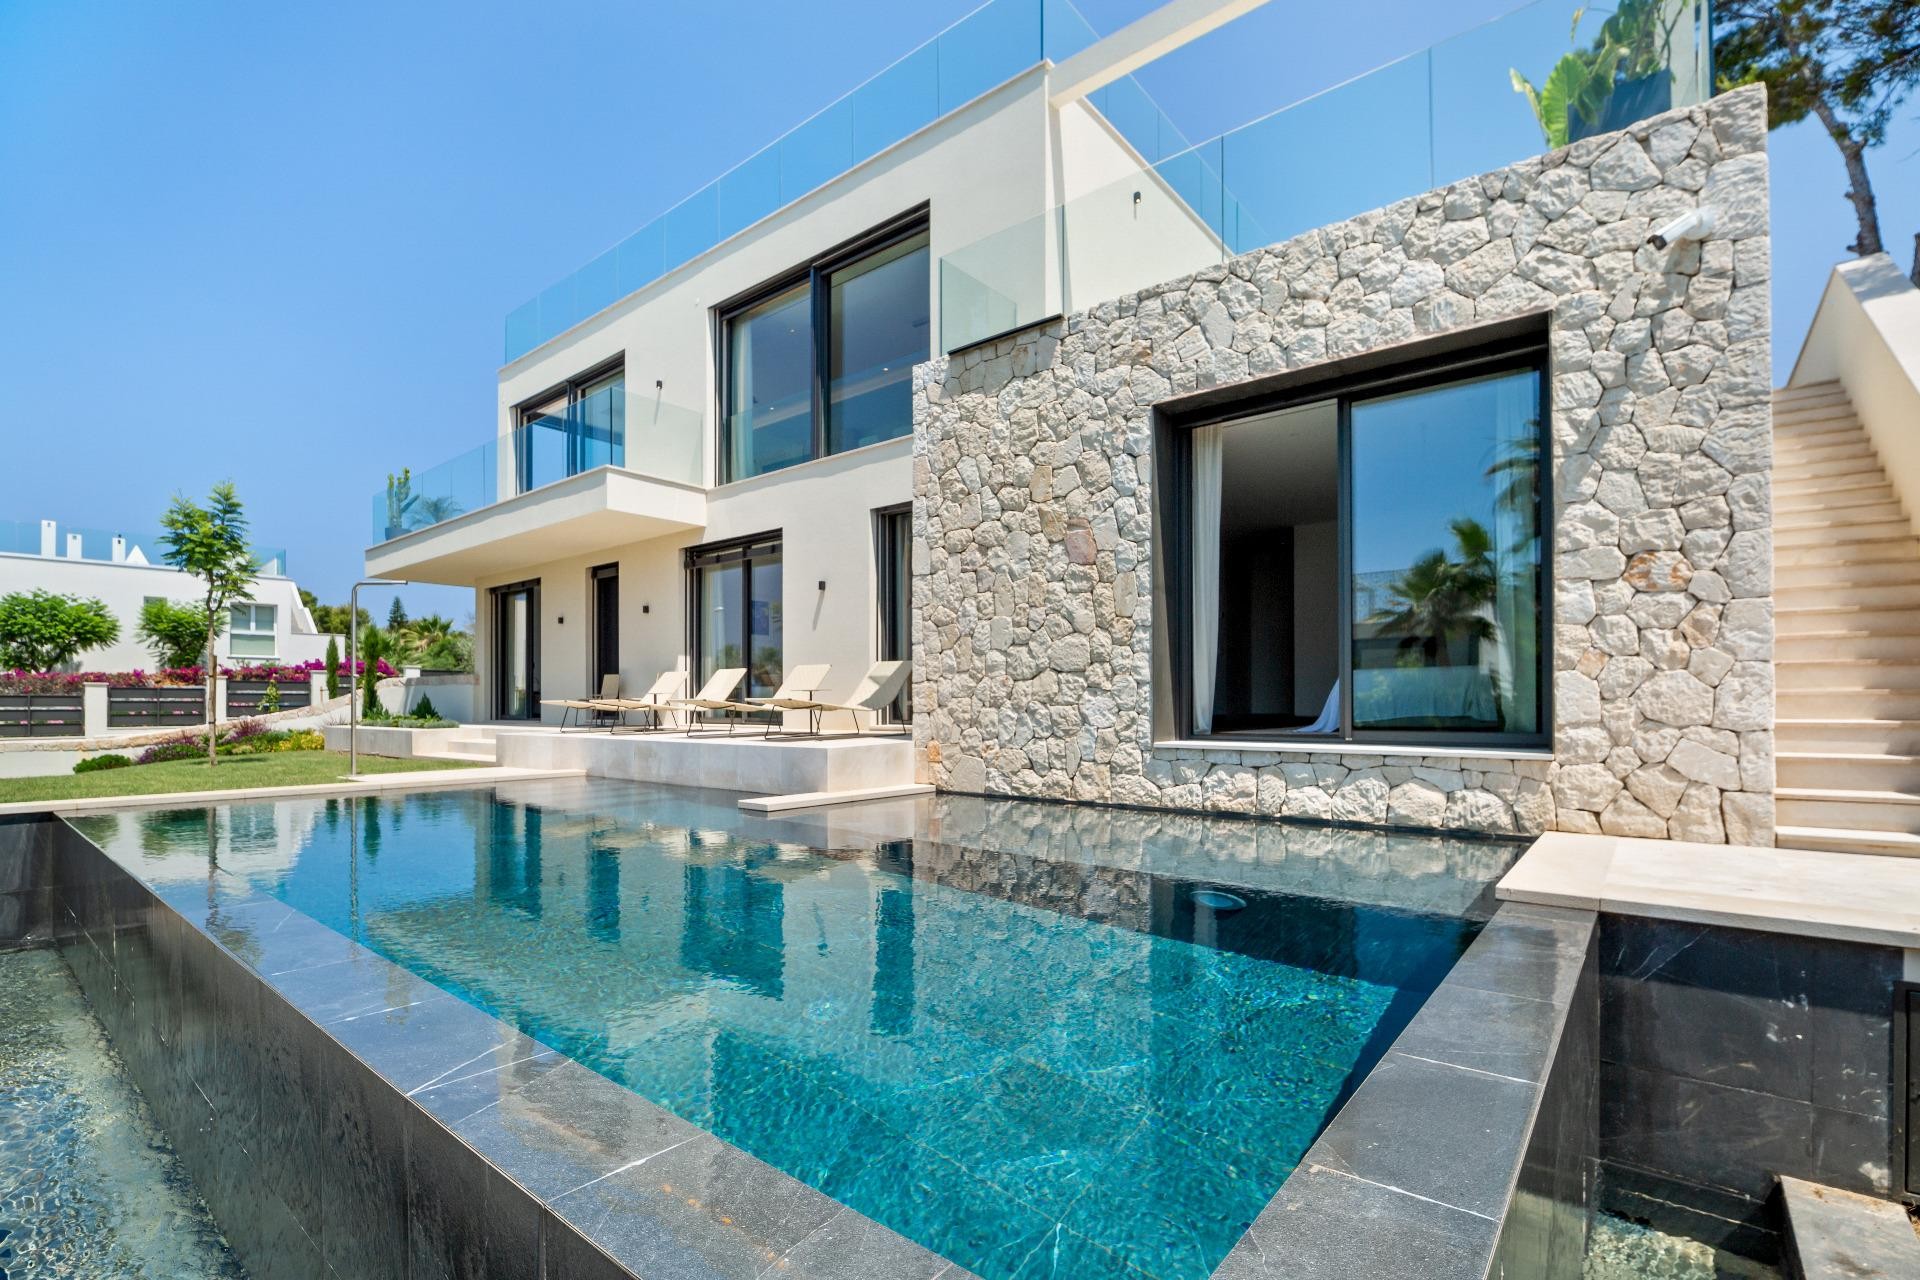 Bright new villa in modern design with excellent sea views in exclusive area of Santa Ponsa